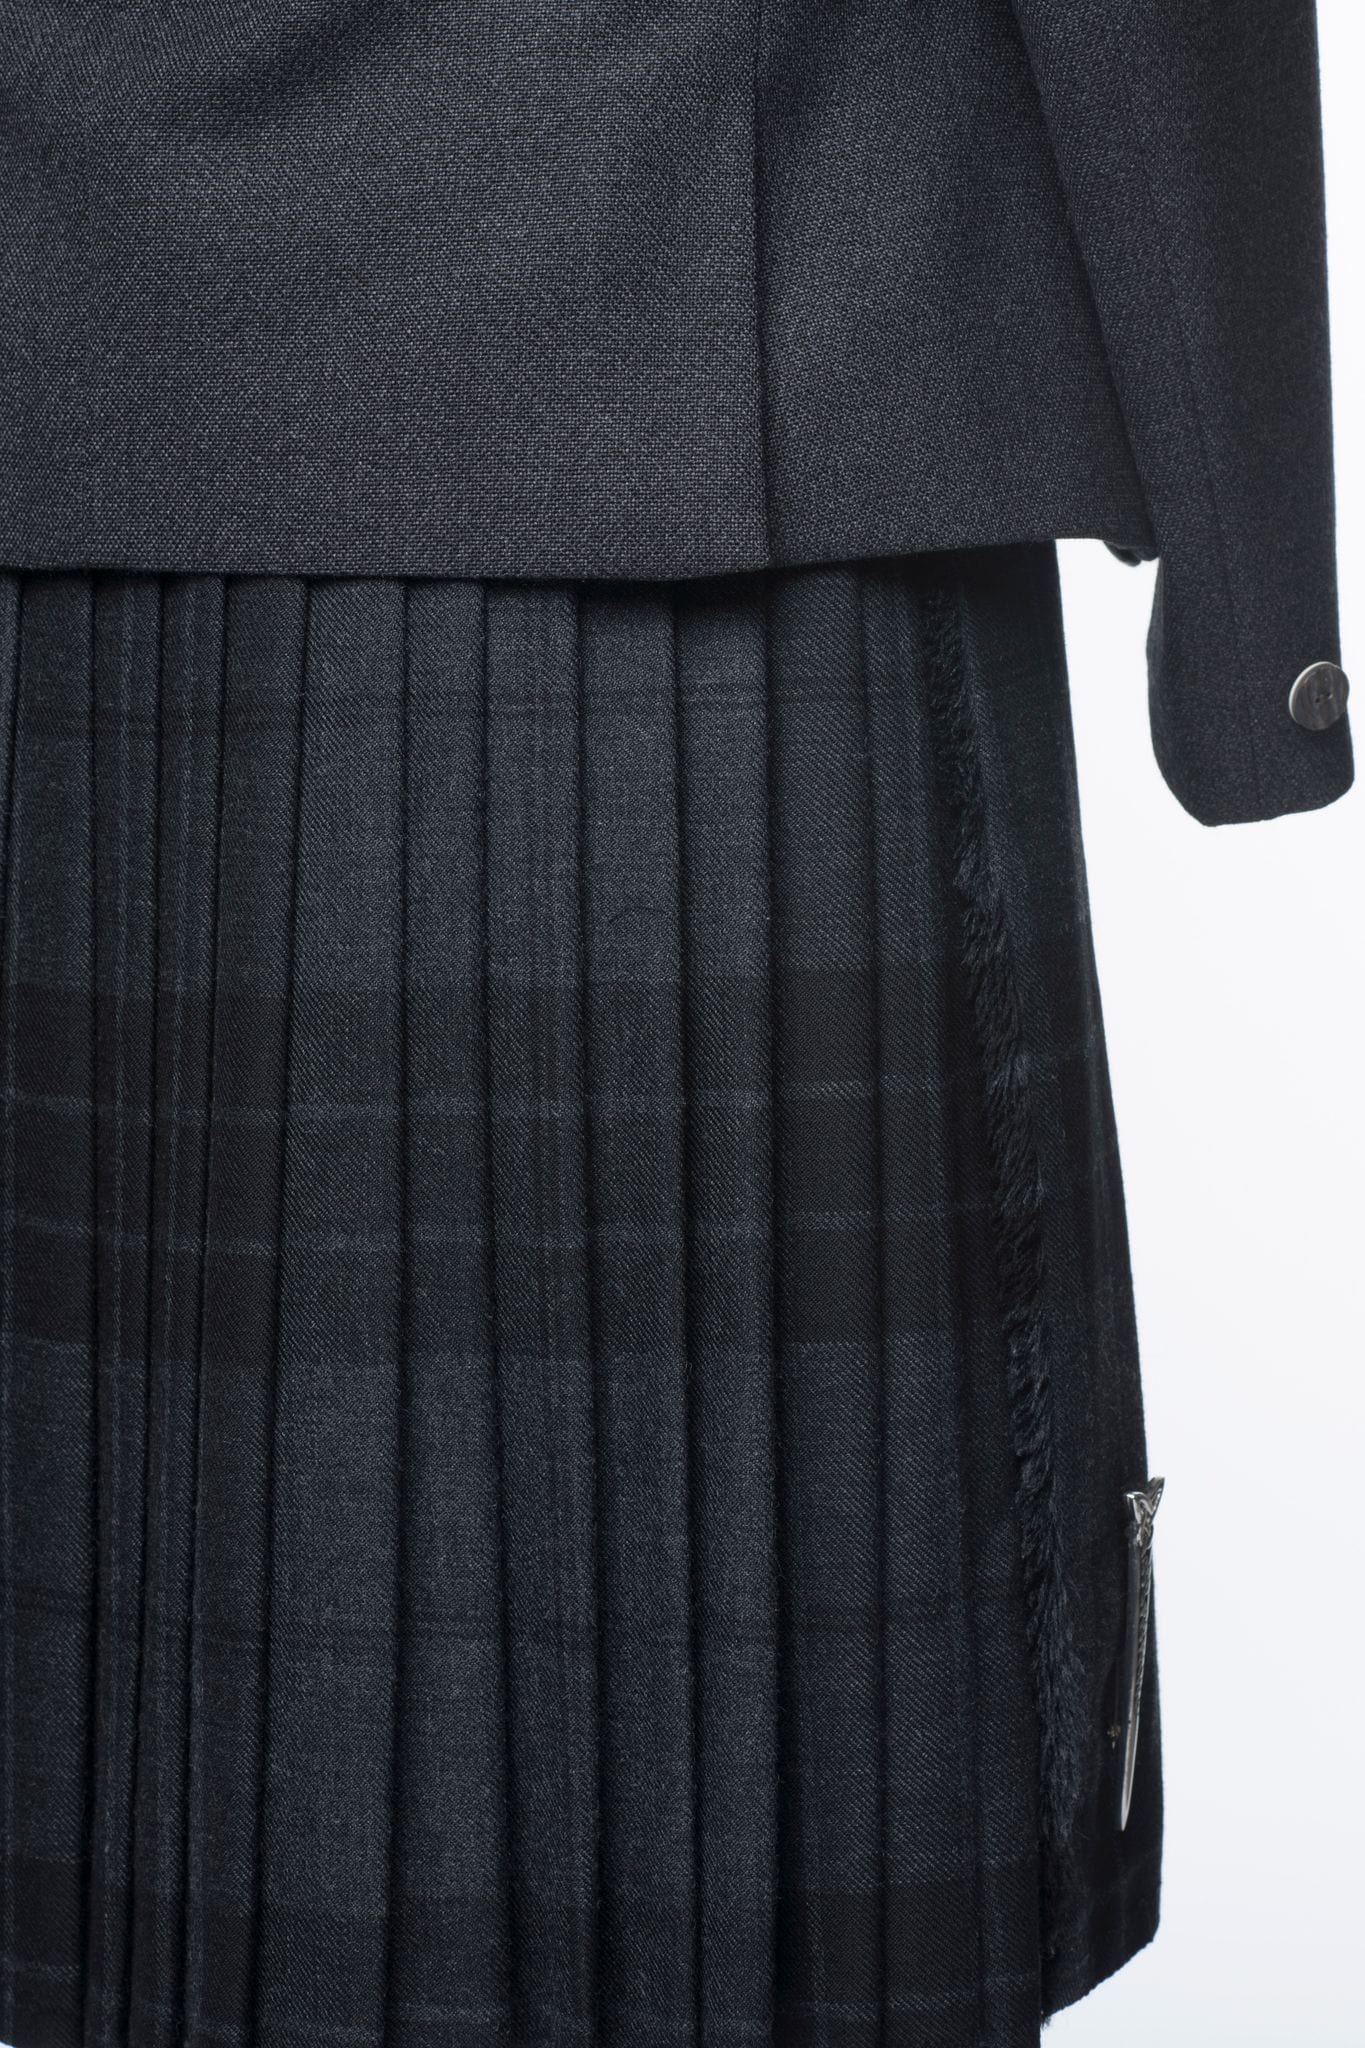 Glen Orchy Tweed Kilt Outfit - MacGregor and MacDuff